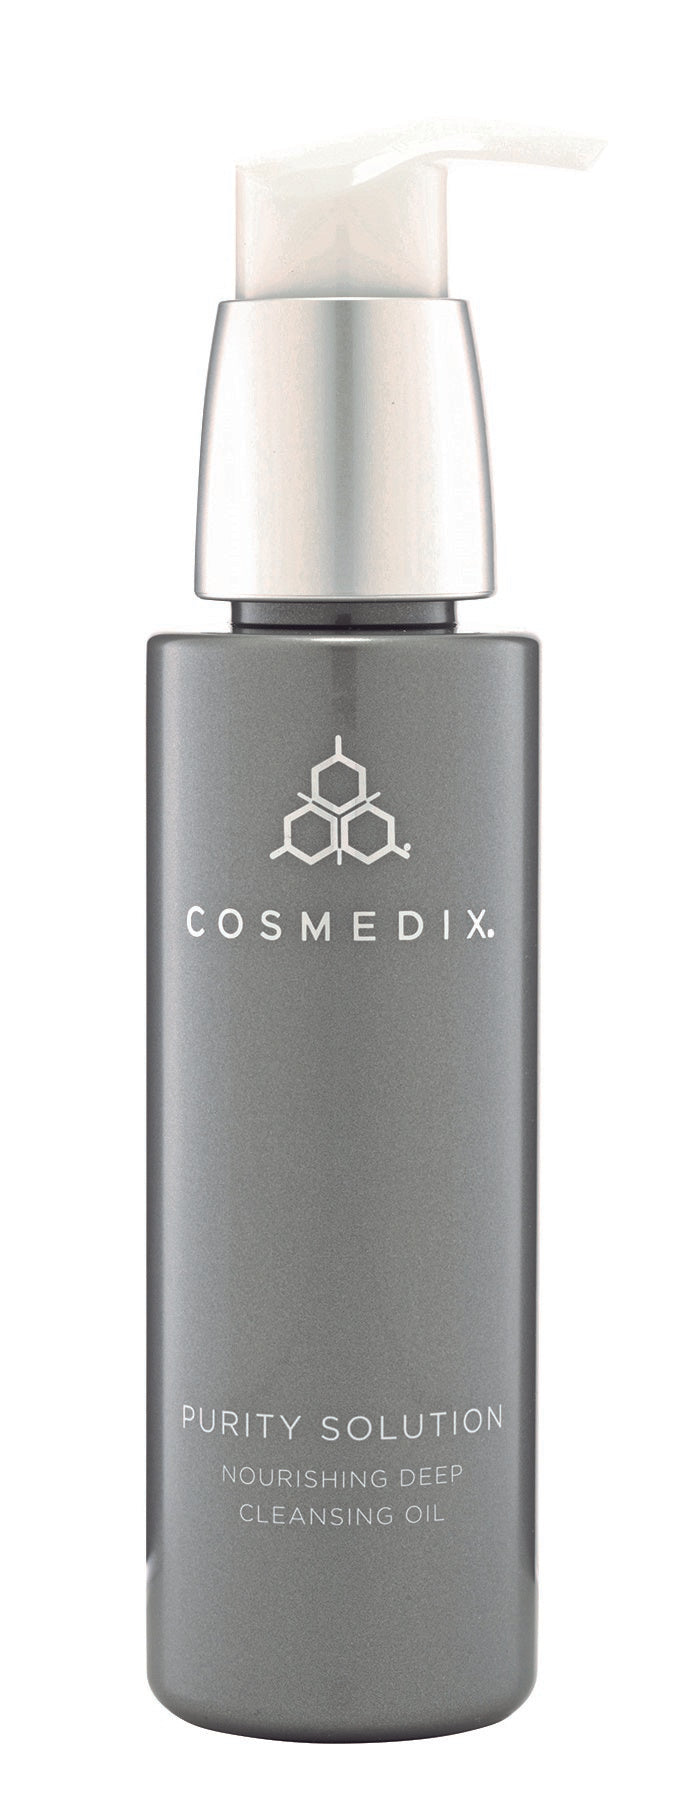 Cosmedix Purity Solution